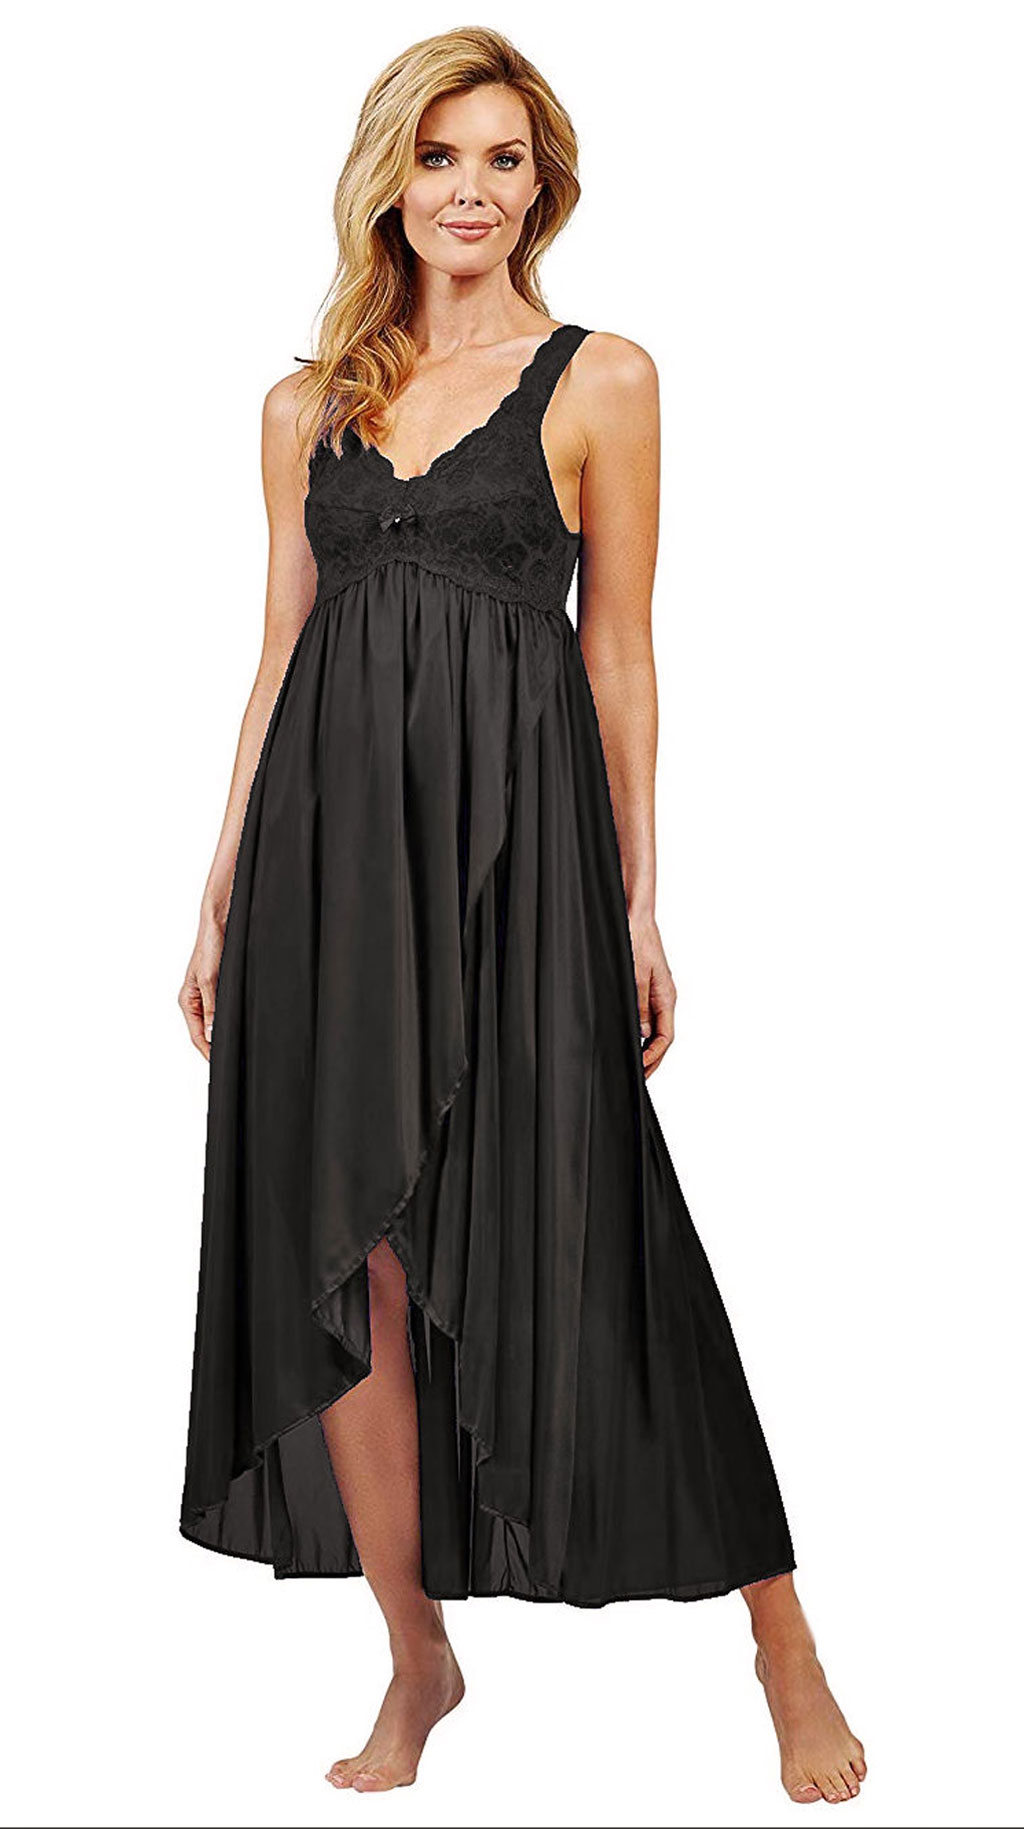 Bra Lace Nightgowns - Women's Intimates | Night dress for women, Night dress,  Night gown